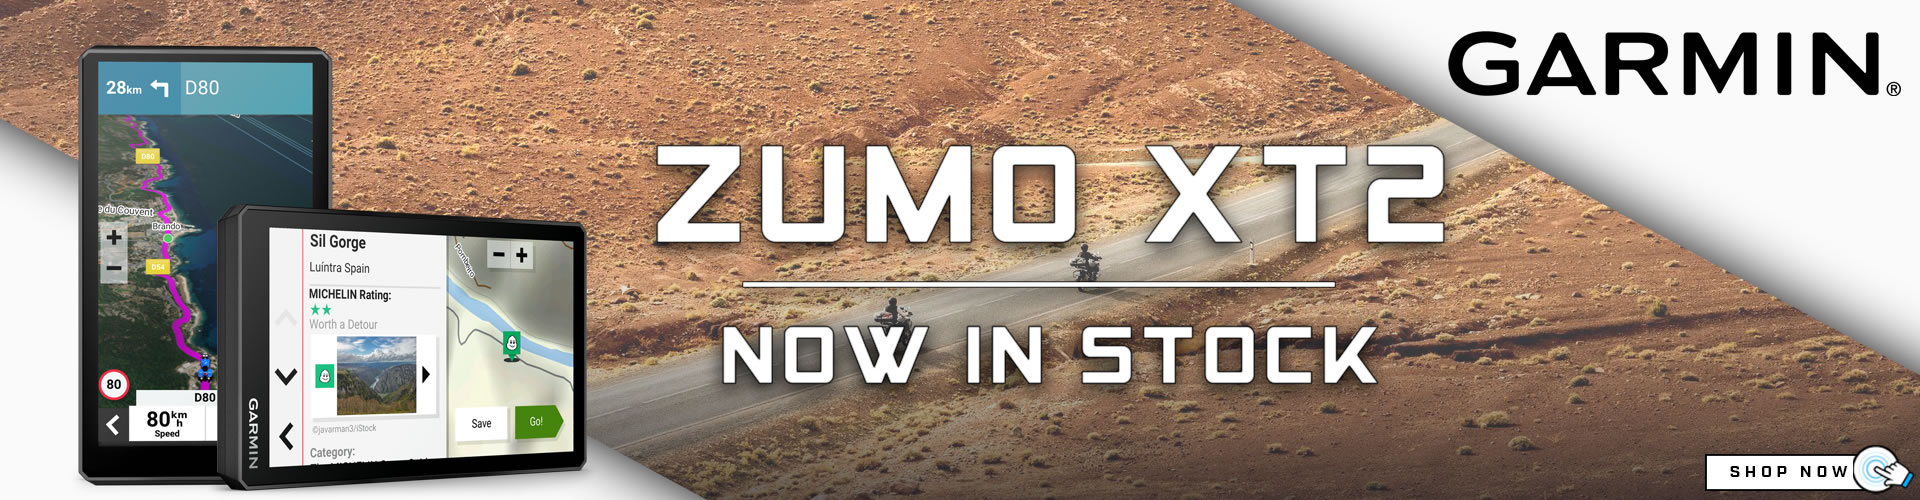 Garmin Zumo XT2